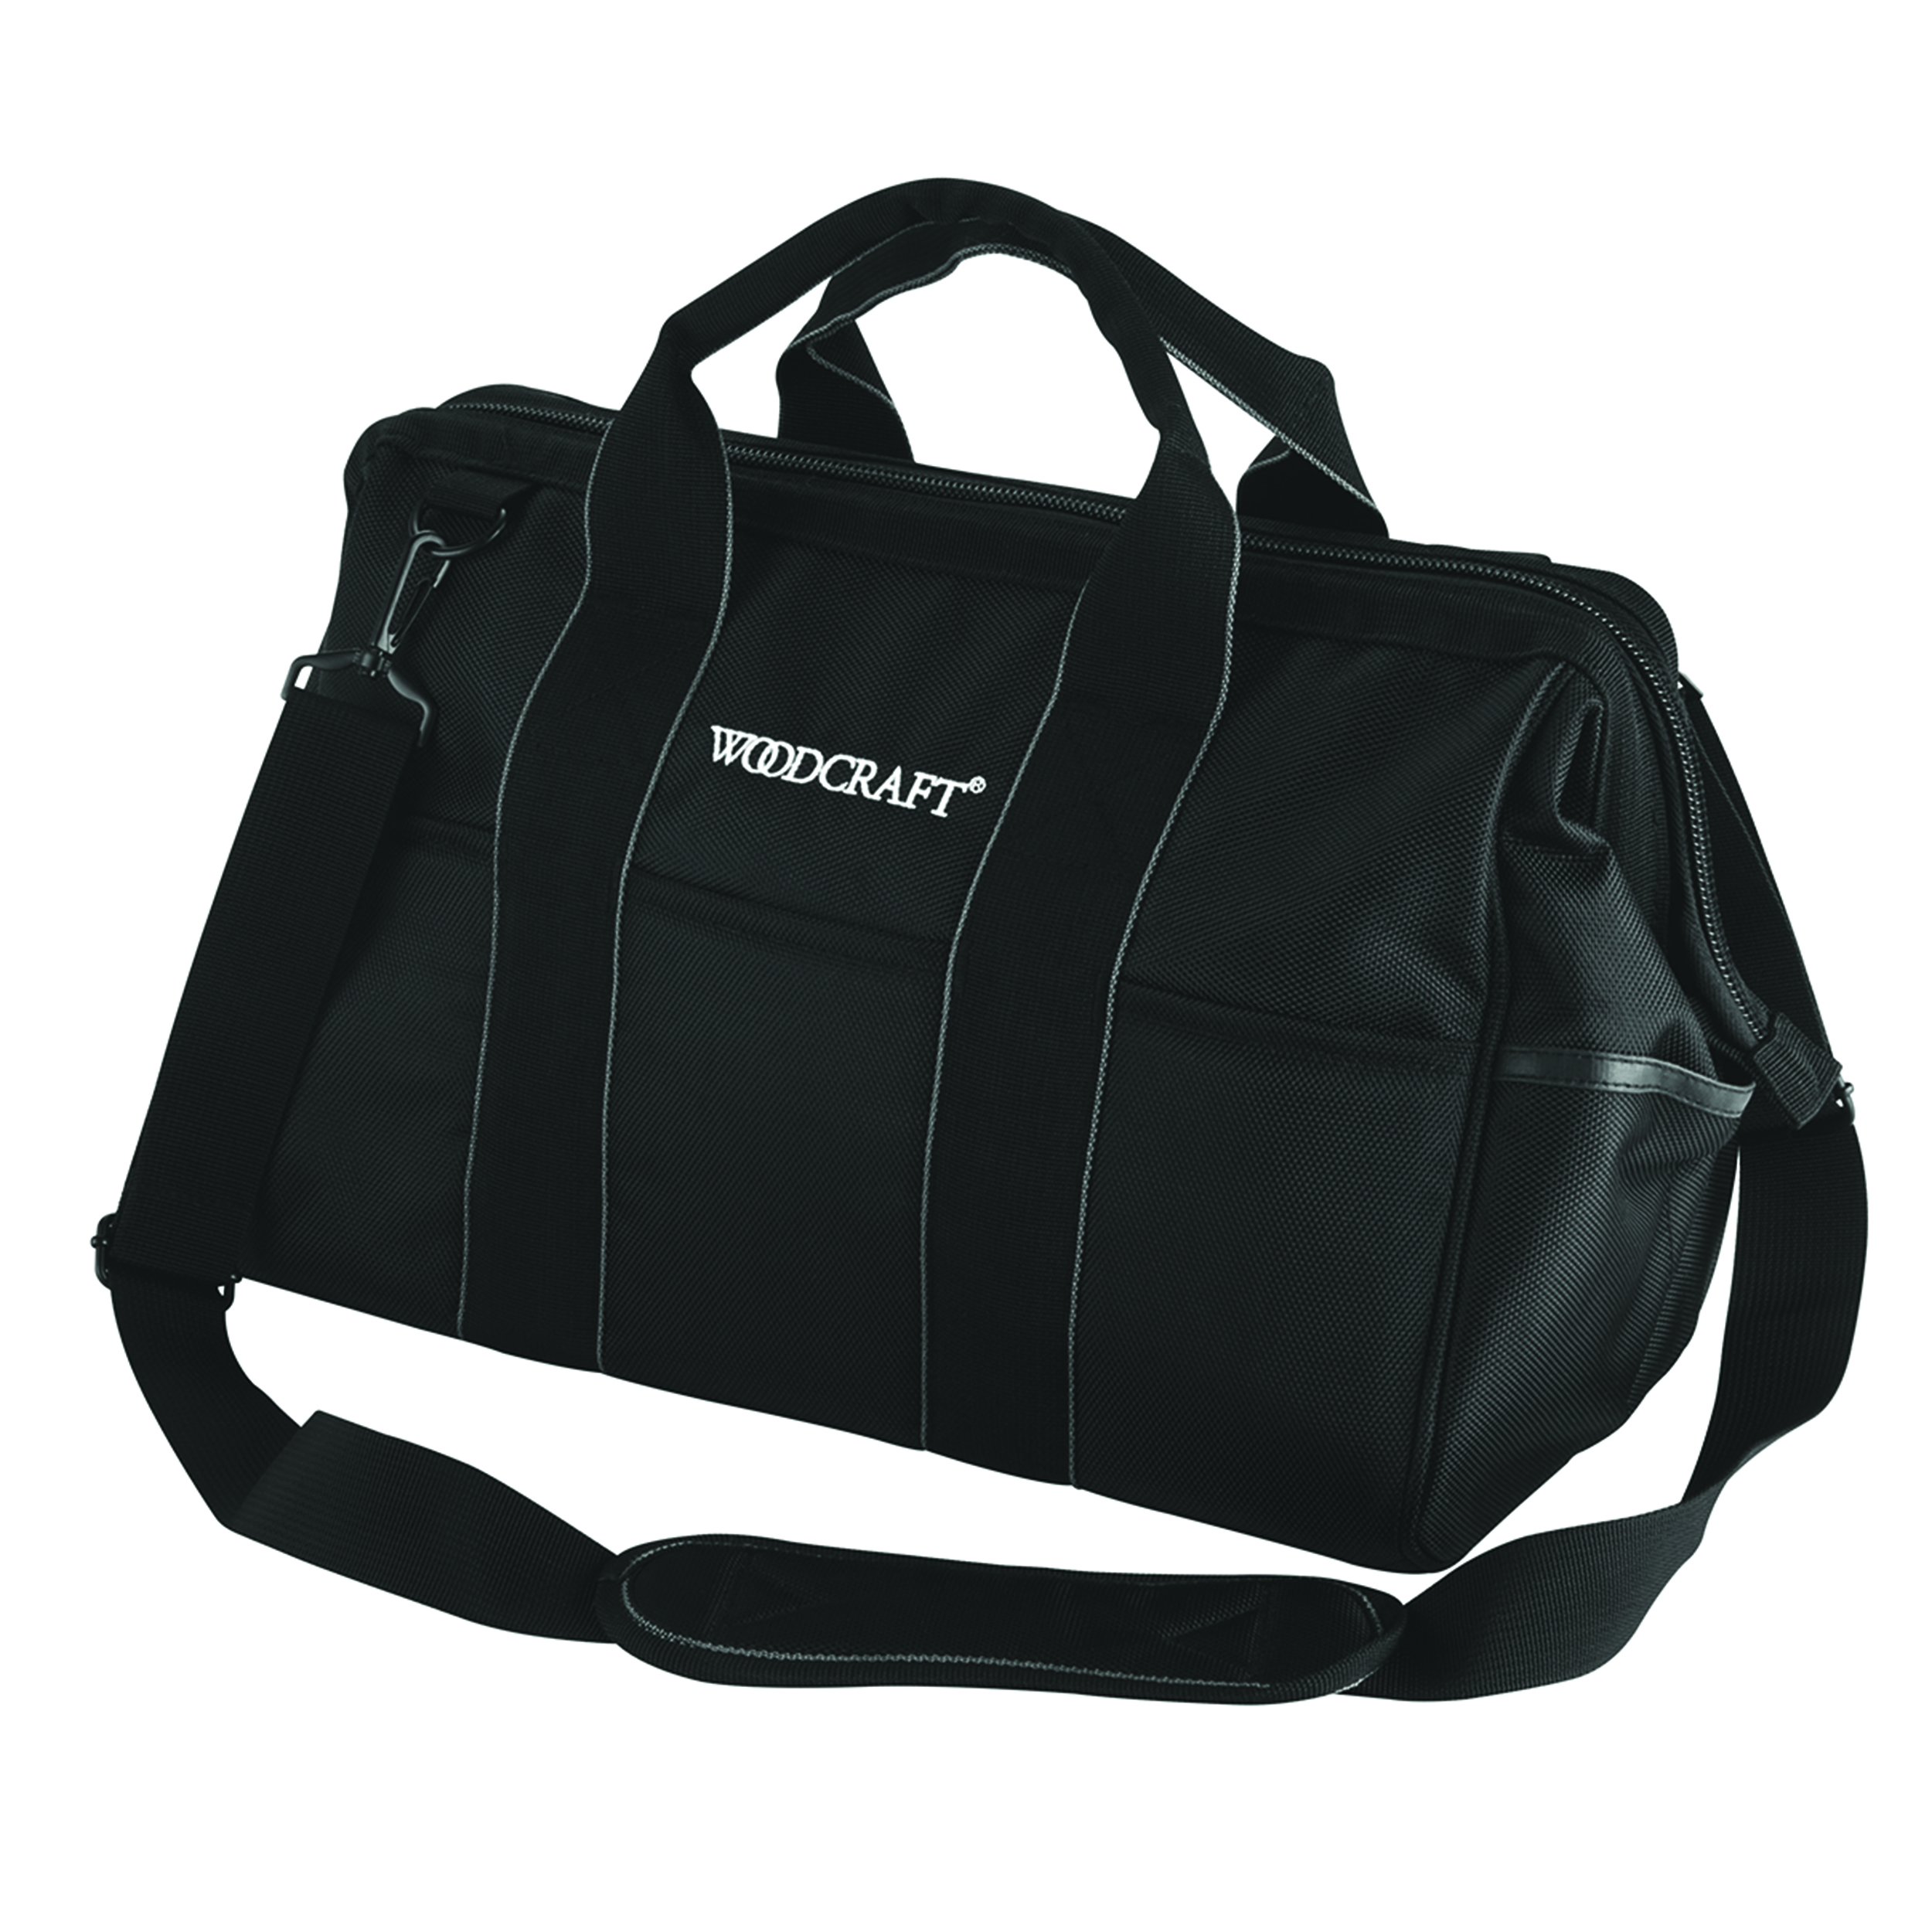 21 Pocket Tool Bag, Black